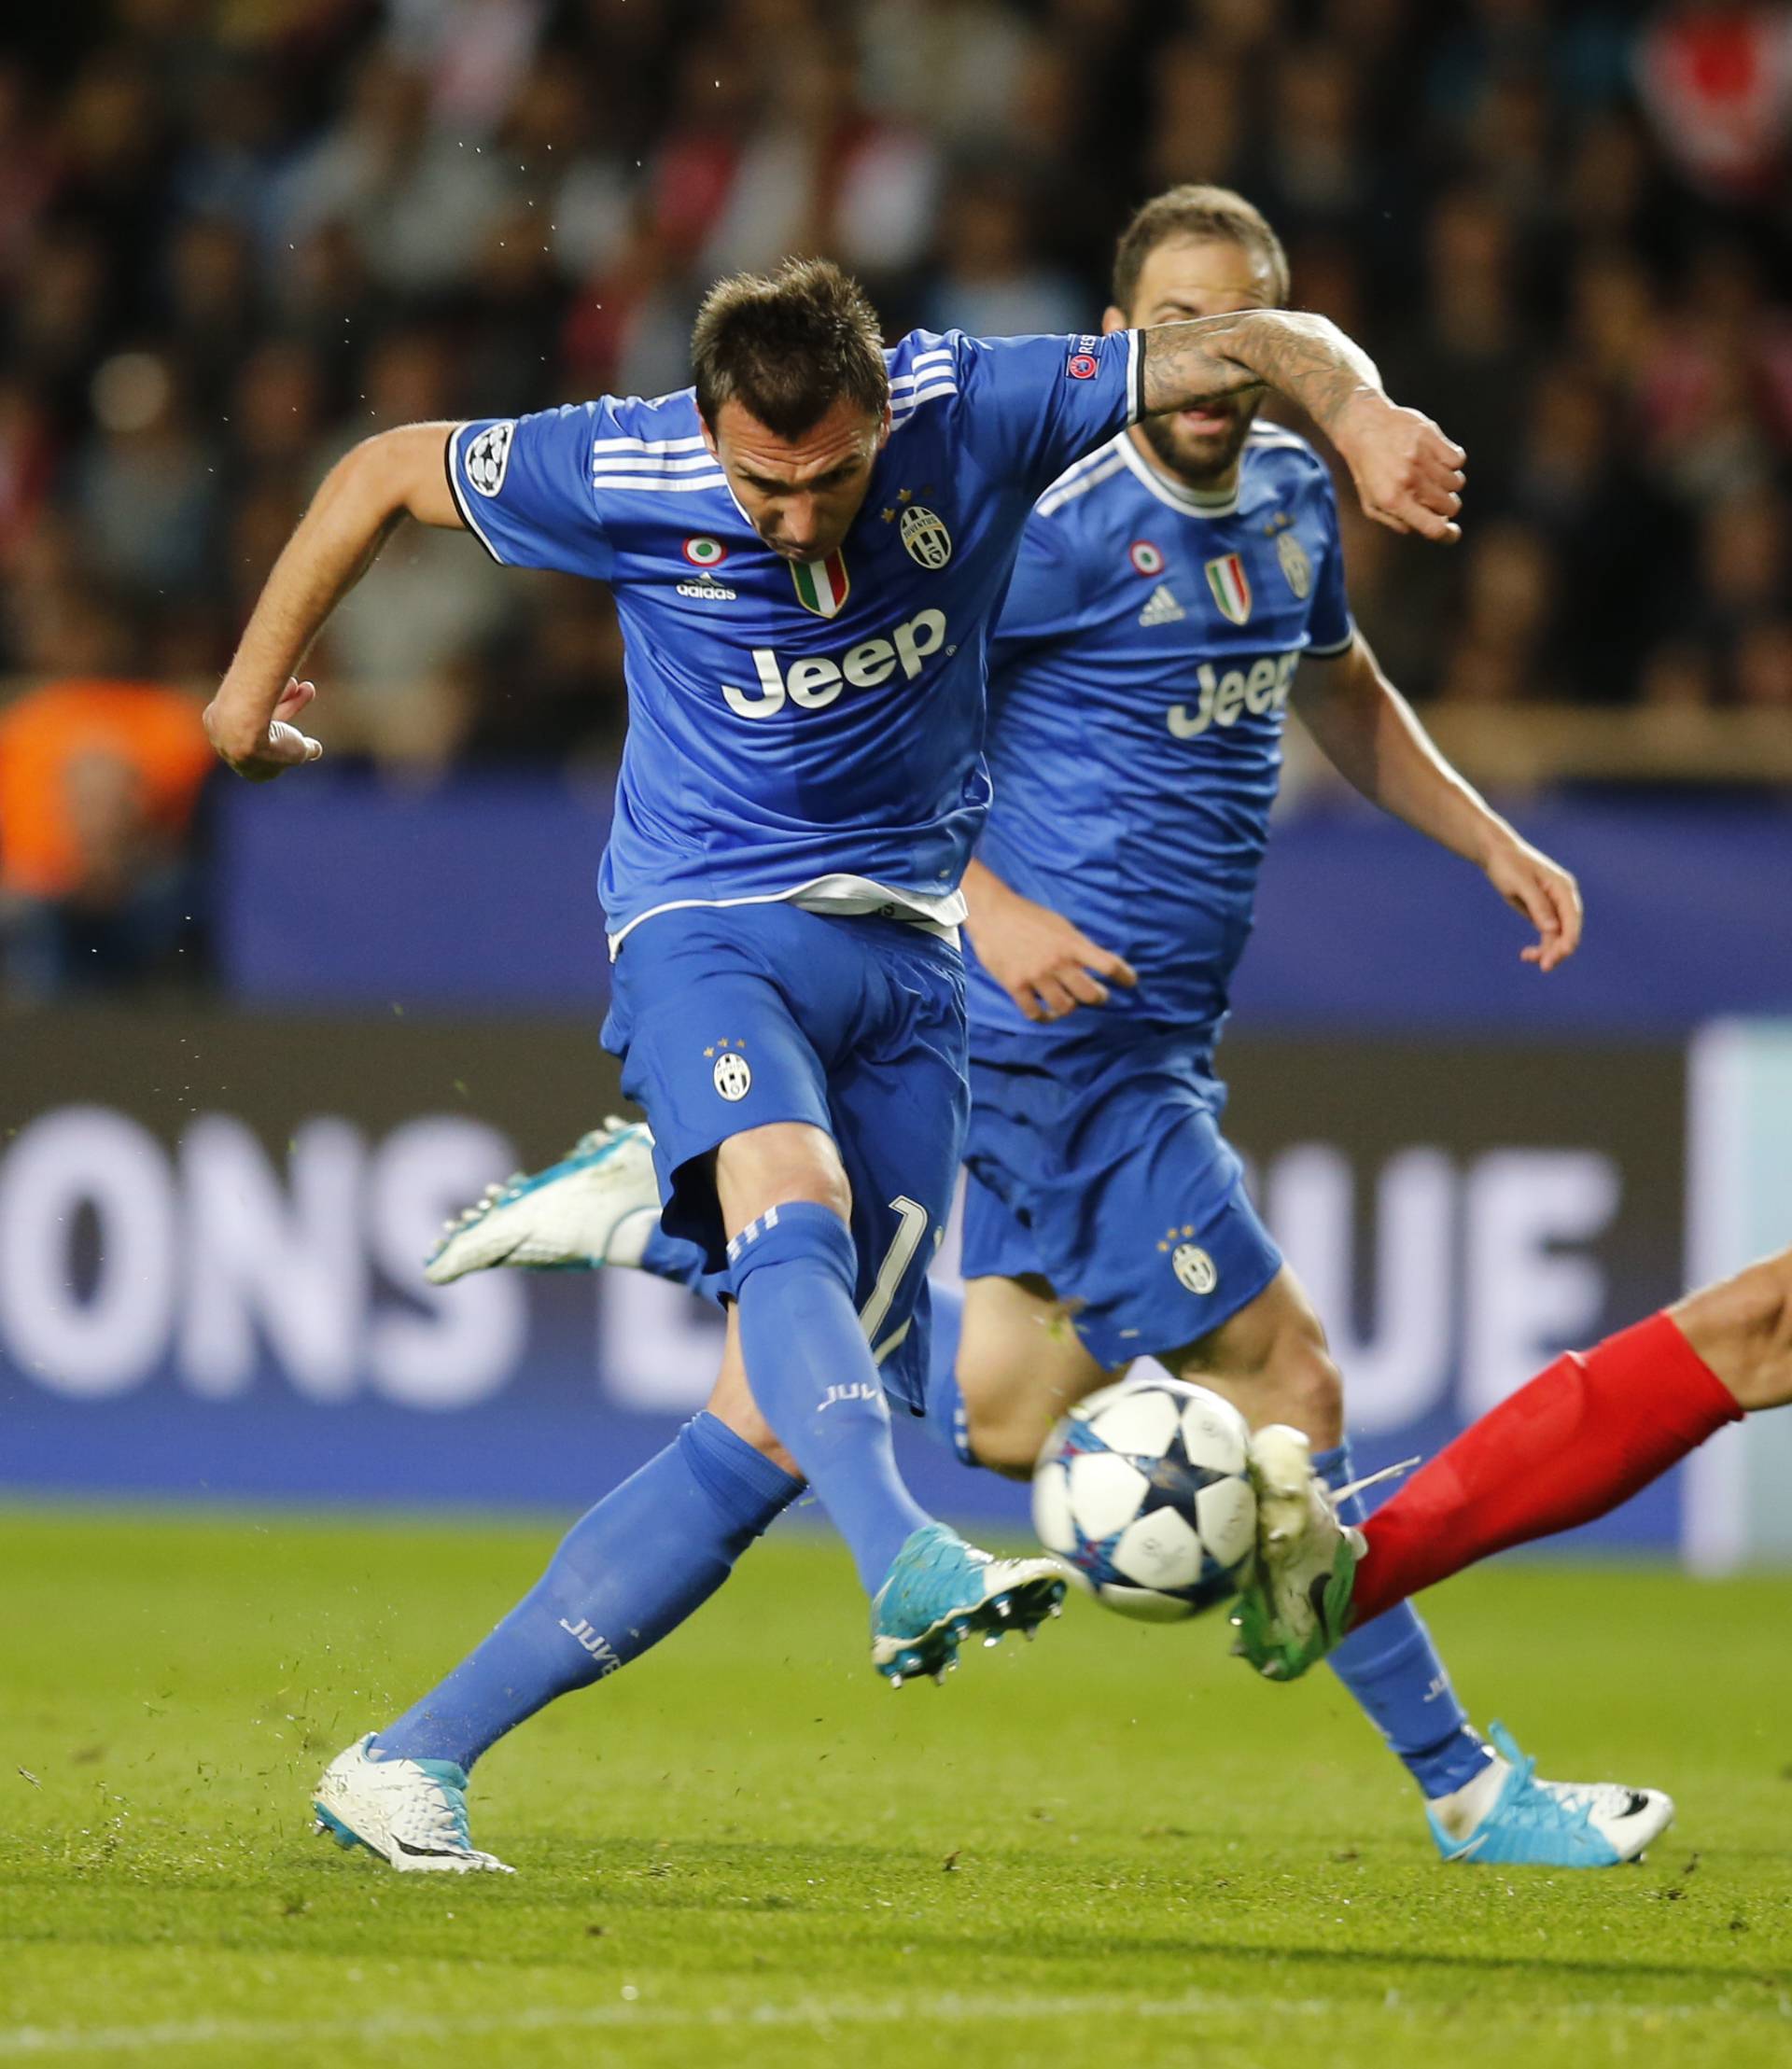 Juventus' Mario Mandzukic has a shot at goal